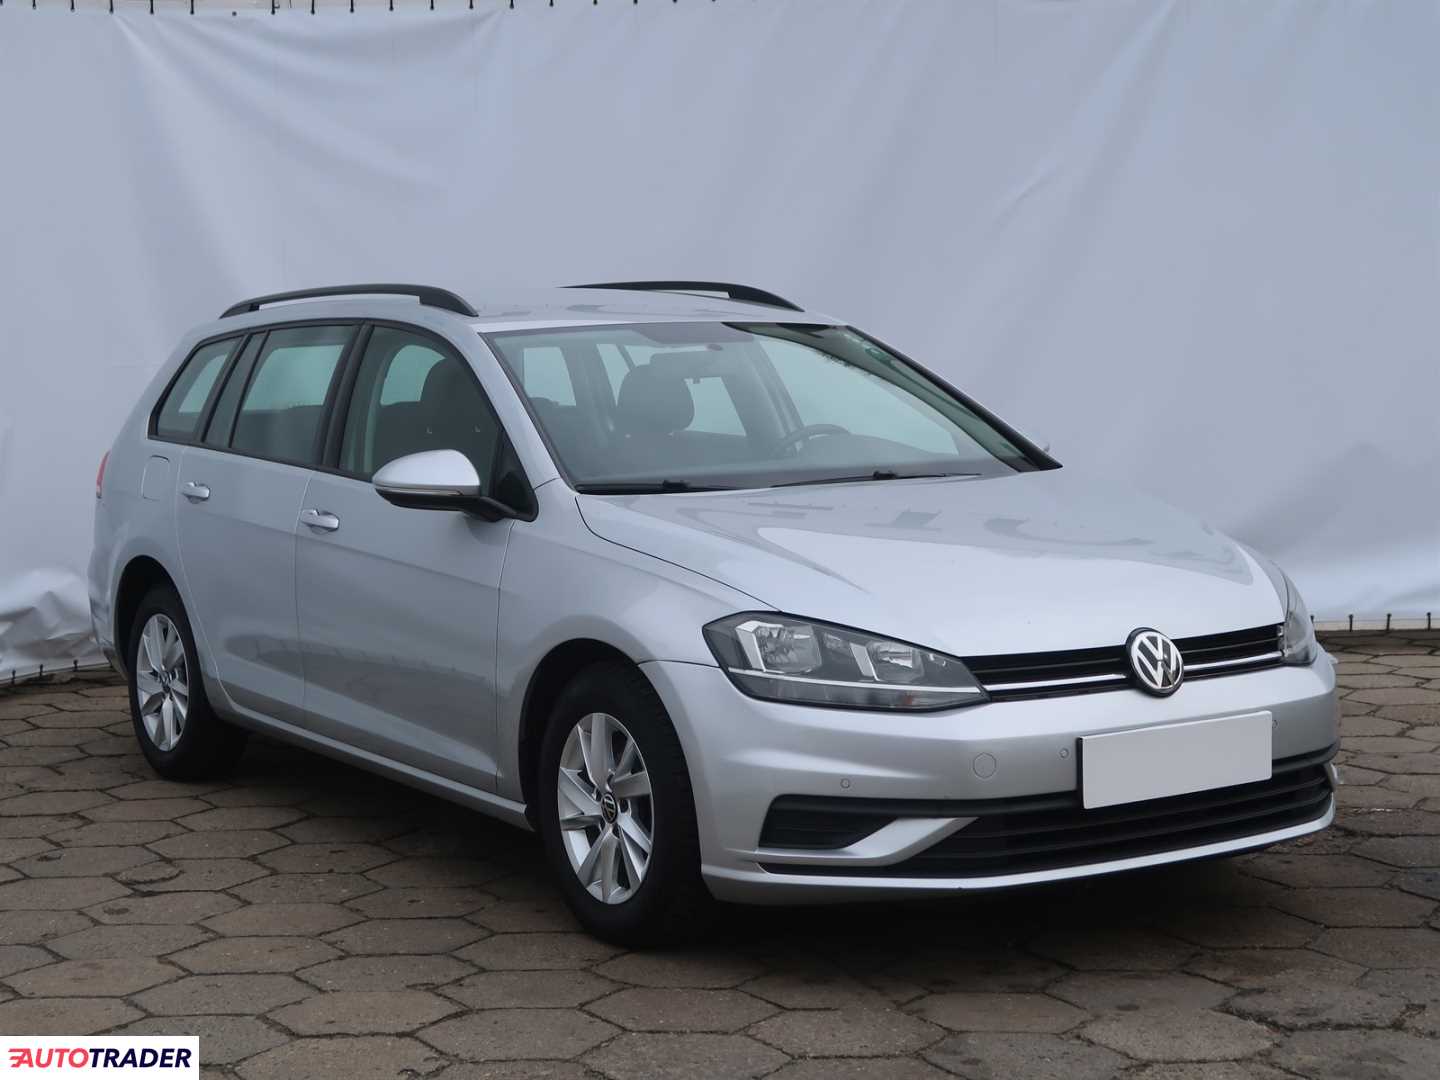 Volkswagen Golf 2018 1.4 123 KM